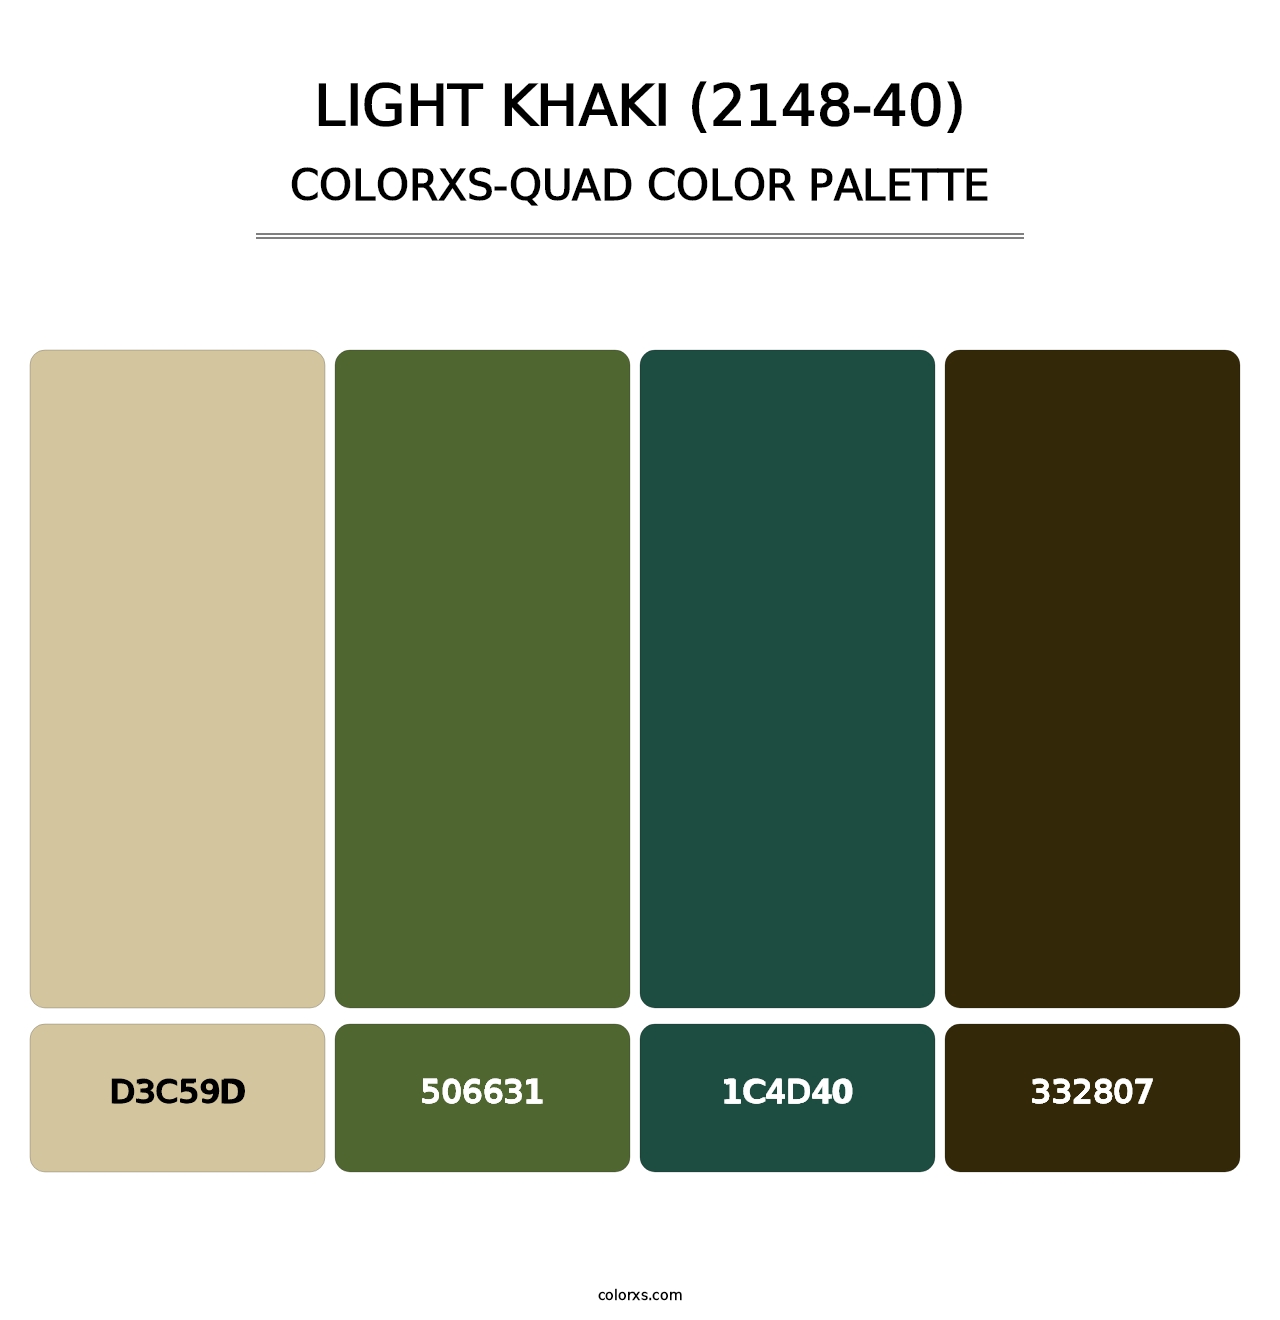 Light Khaki (2148-40) - Colorxs Quad Palette